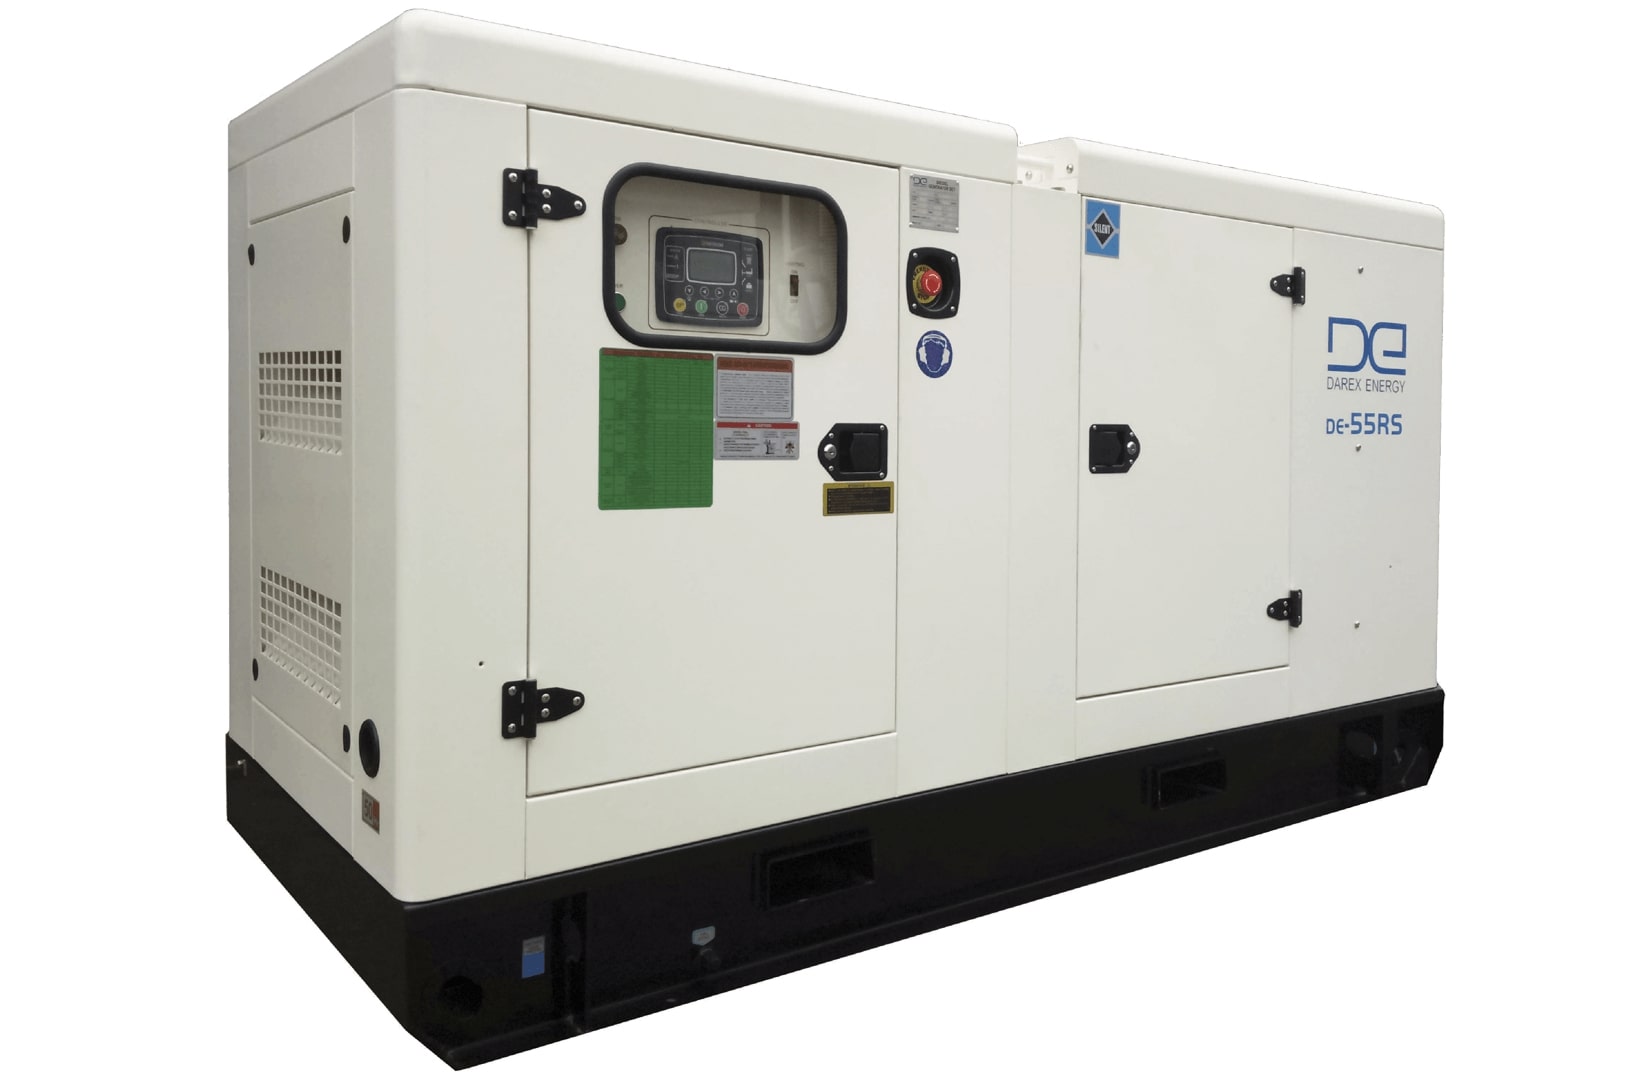 Трьохфазний дизельний генератор Darex Energy DE-55RS Zn